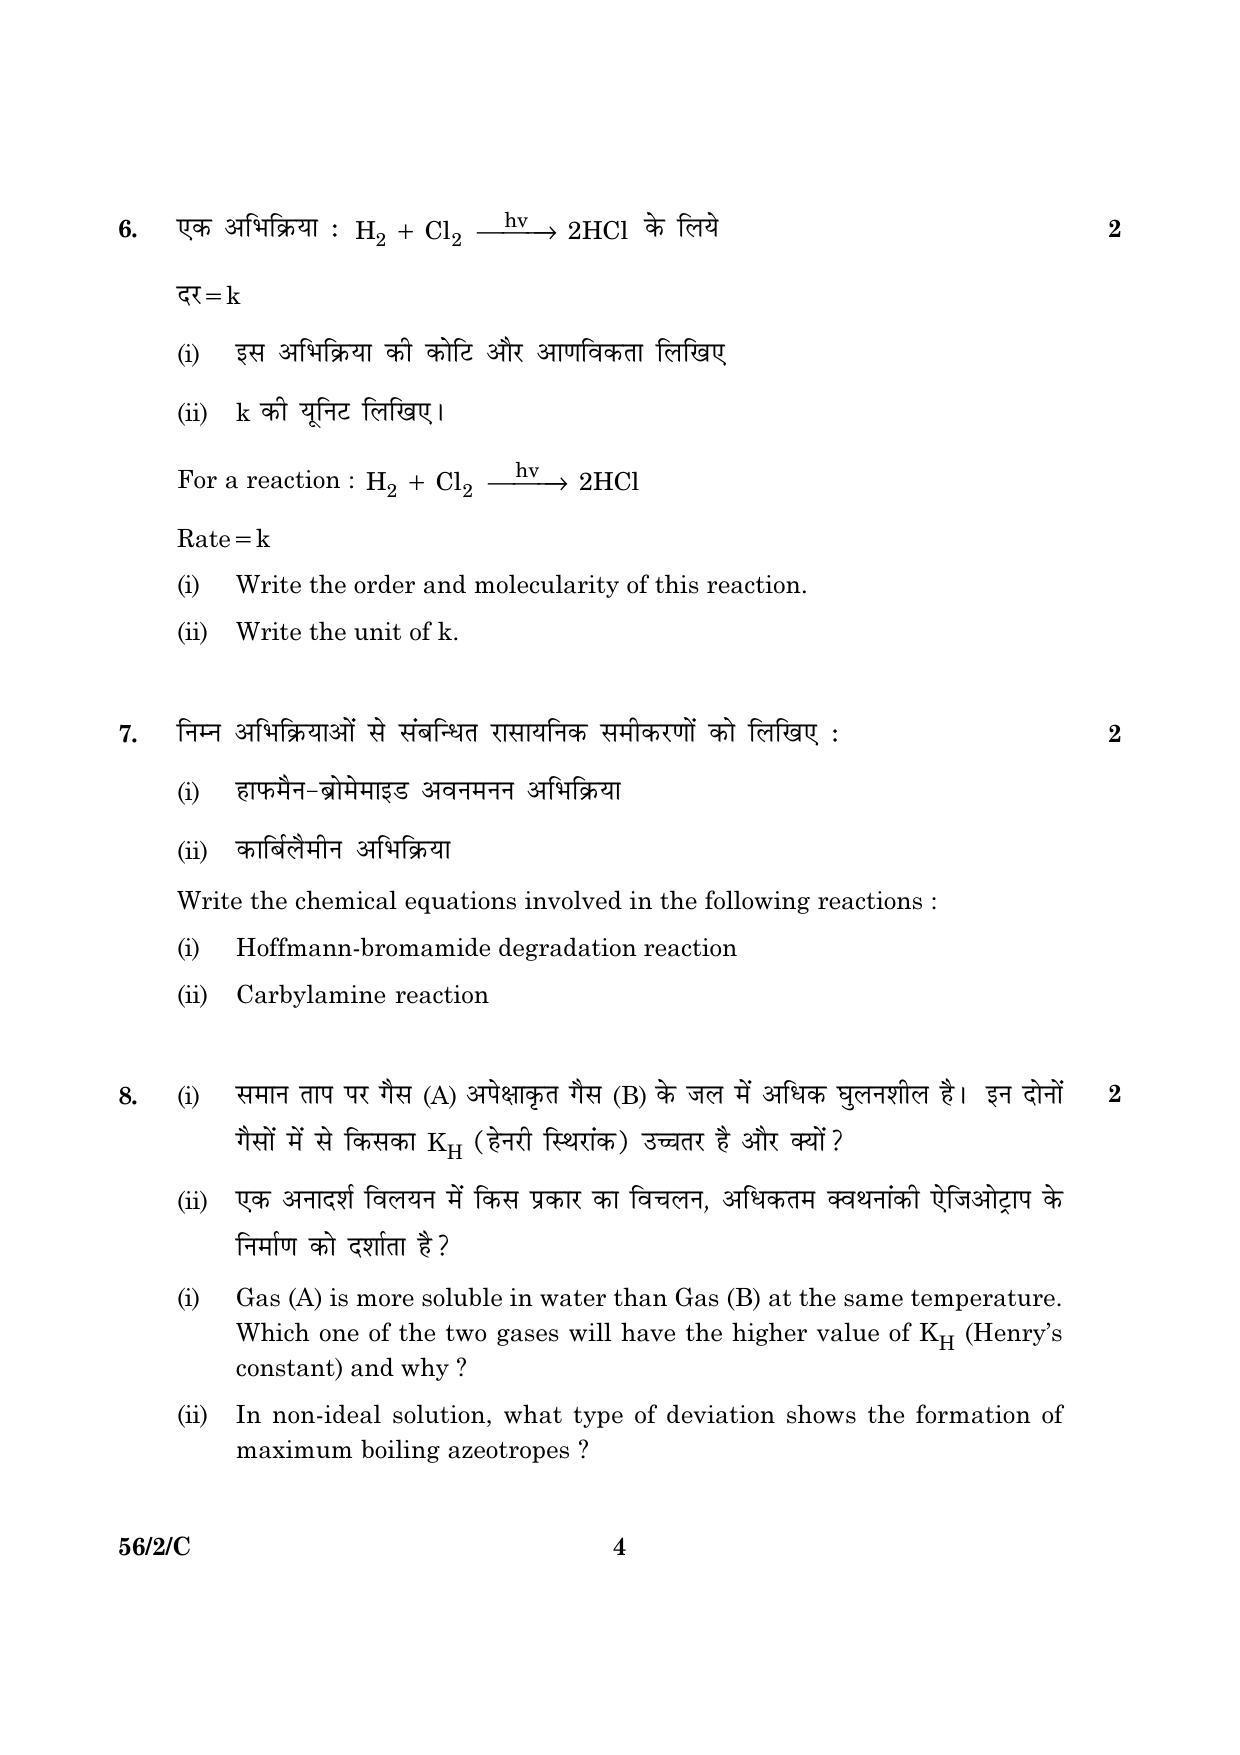 CBSE Class 12 056 Set 2 C Chemistry 2016 Question Paper - Page 4